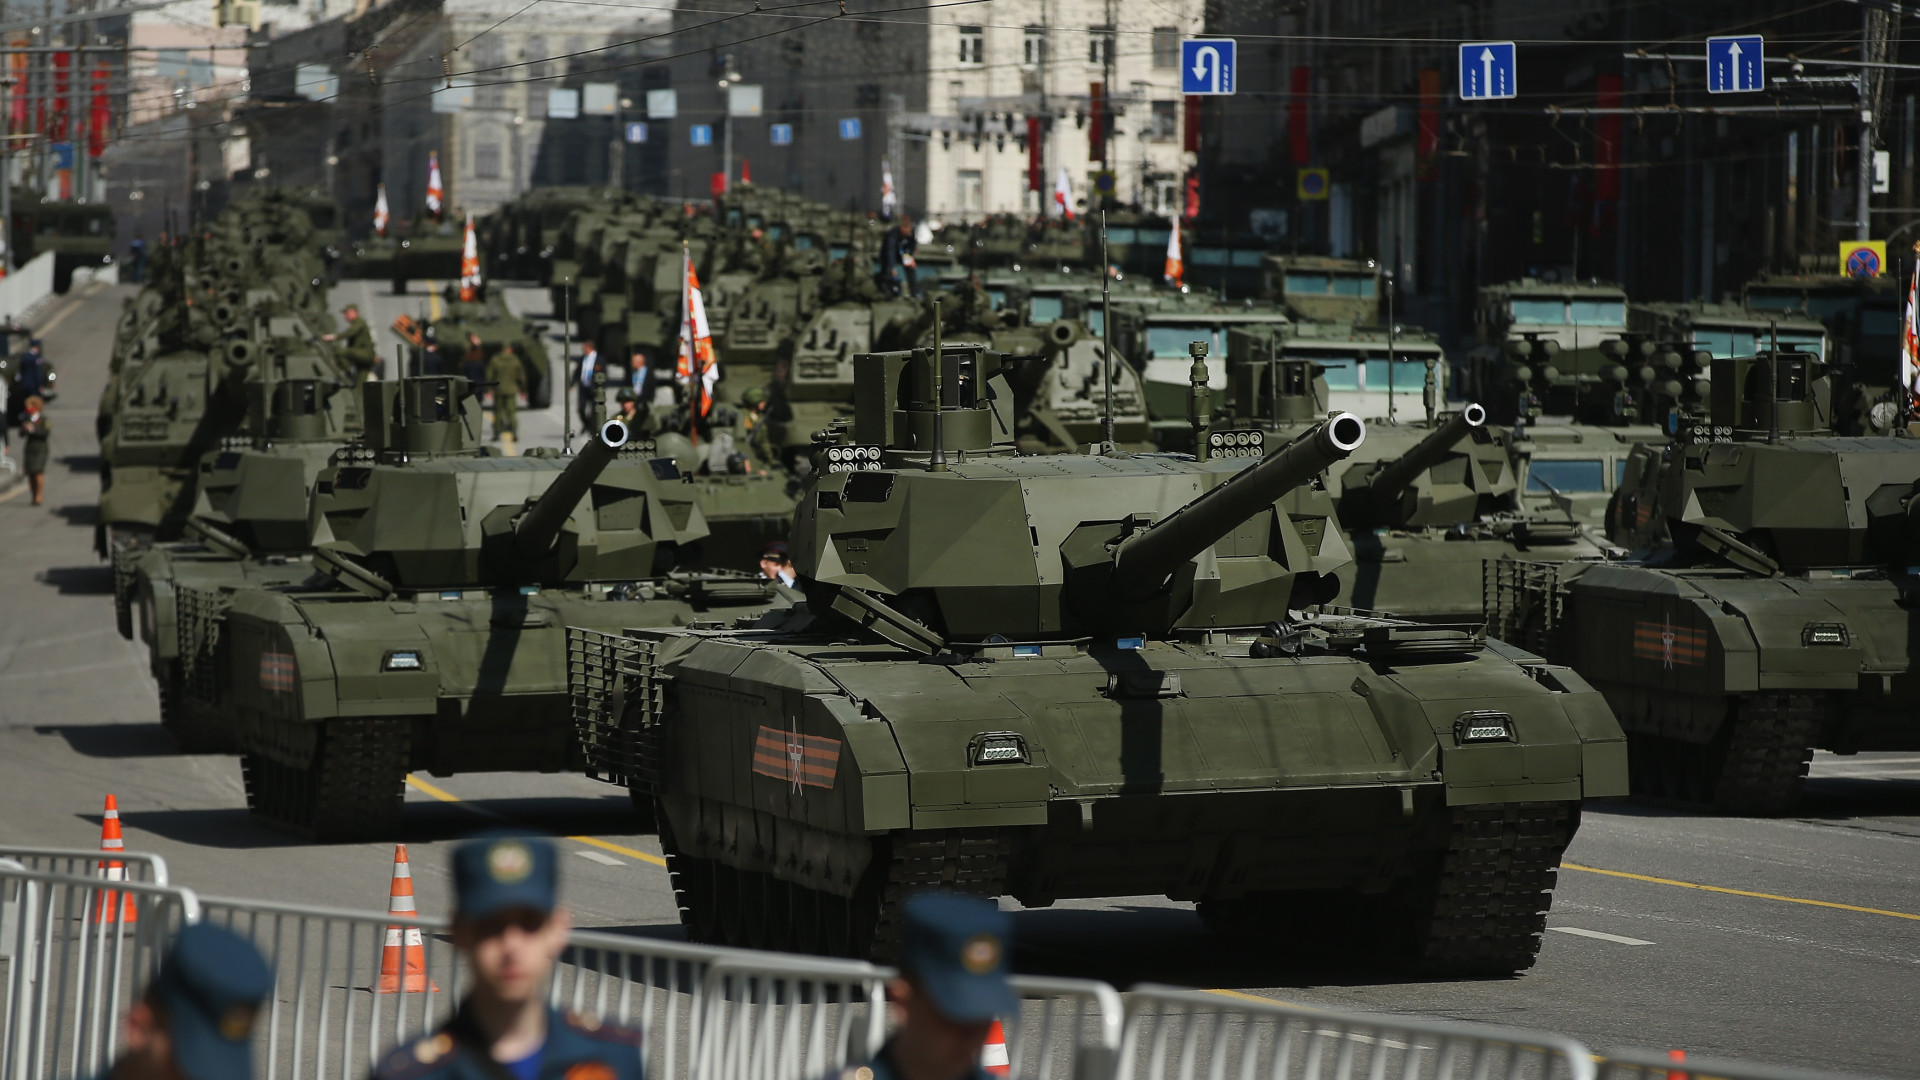 orosz tankok felvonulas vedelmi koltsegvetes 625479